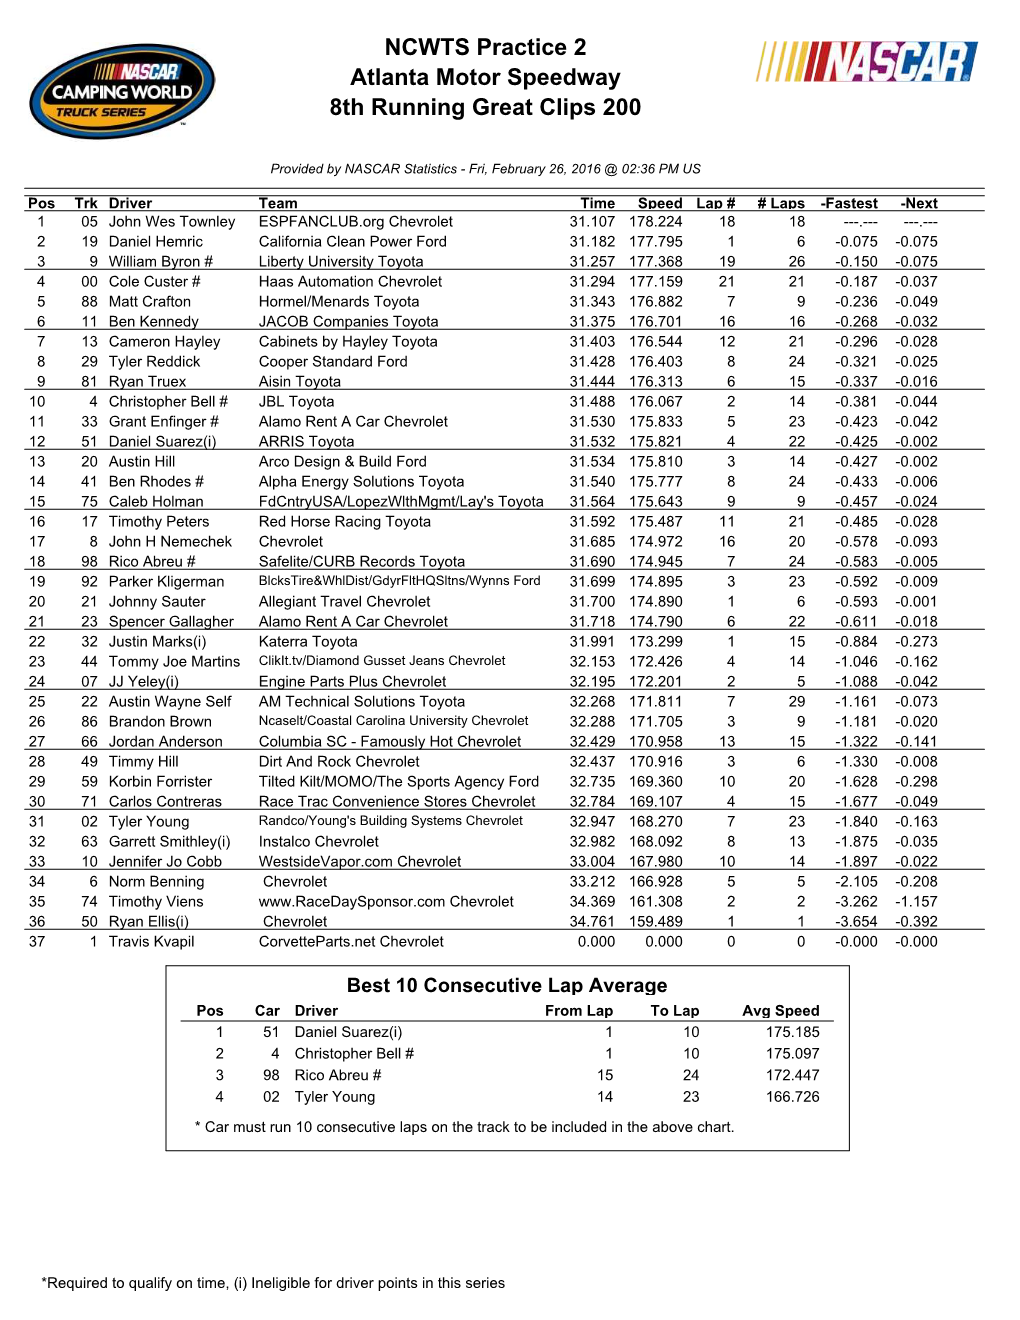 NCWTS Practice 2 Atlanta Motor Speedway 8Th Running Great Clips 200